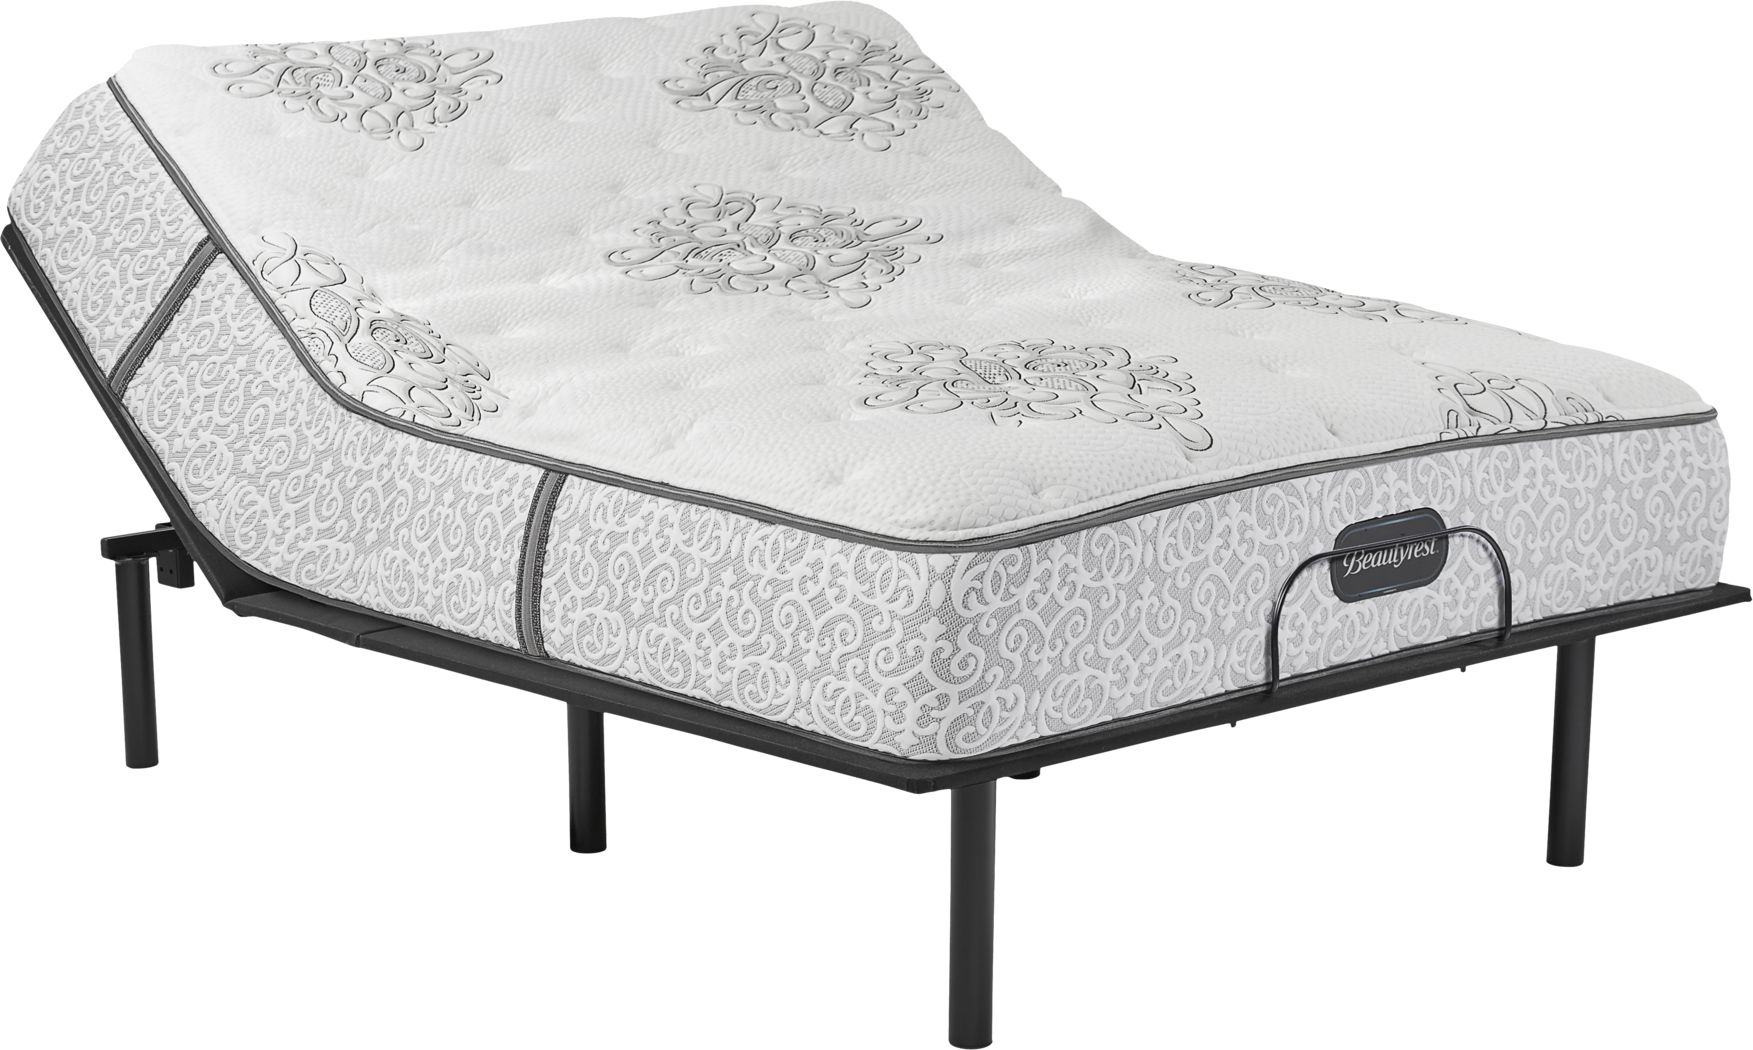 beautyrest mattress size queen with adjustable base